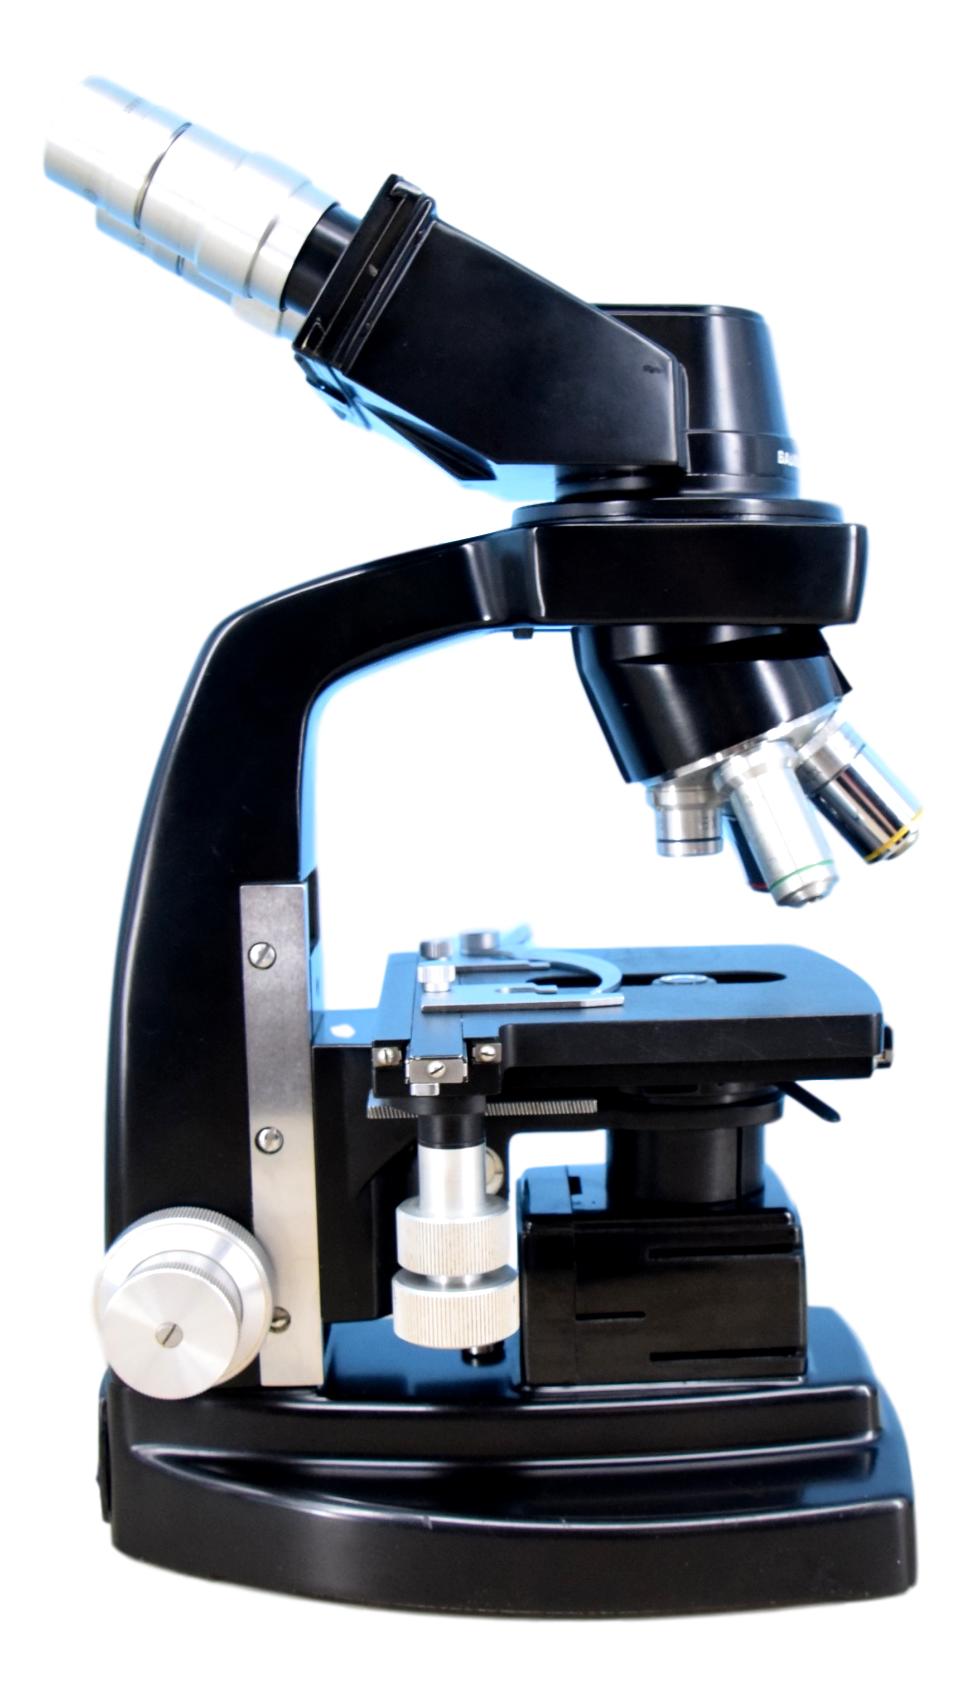 Baush & Lomb DynOptic Binocular Microscope